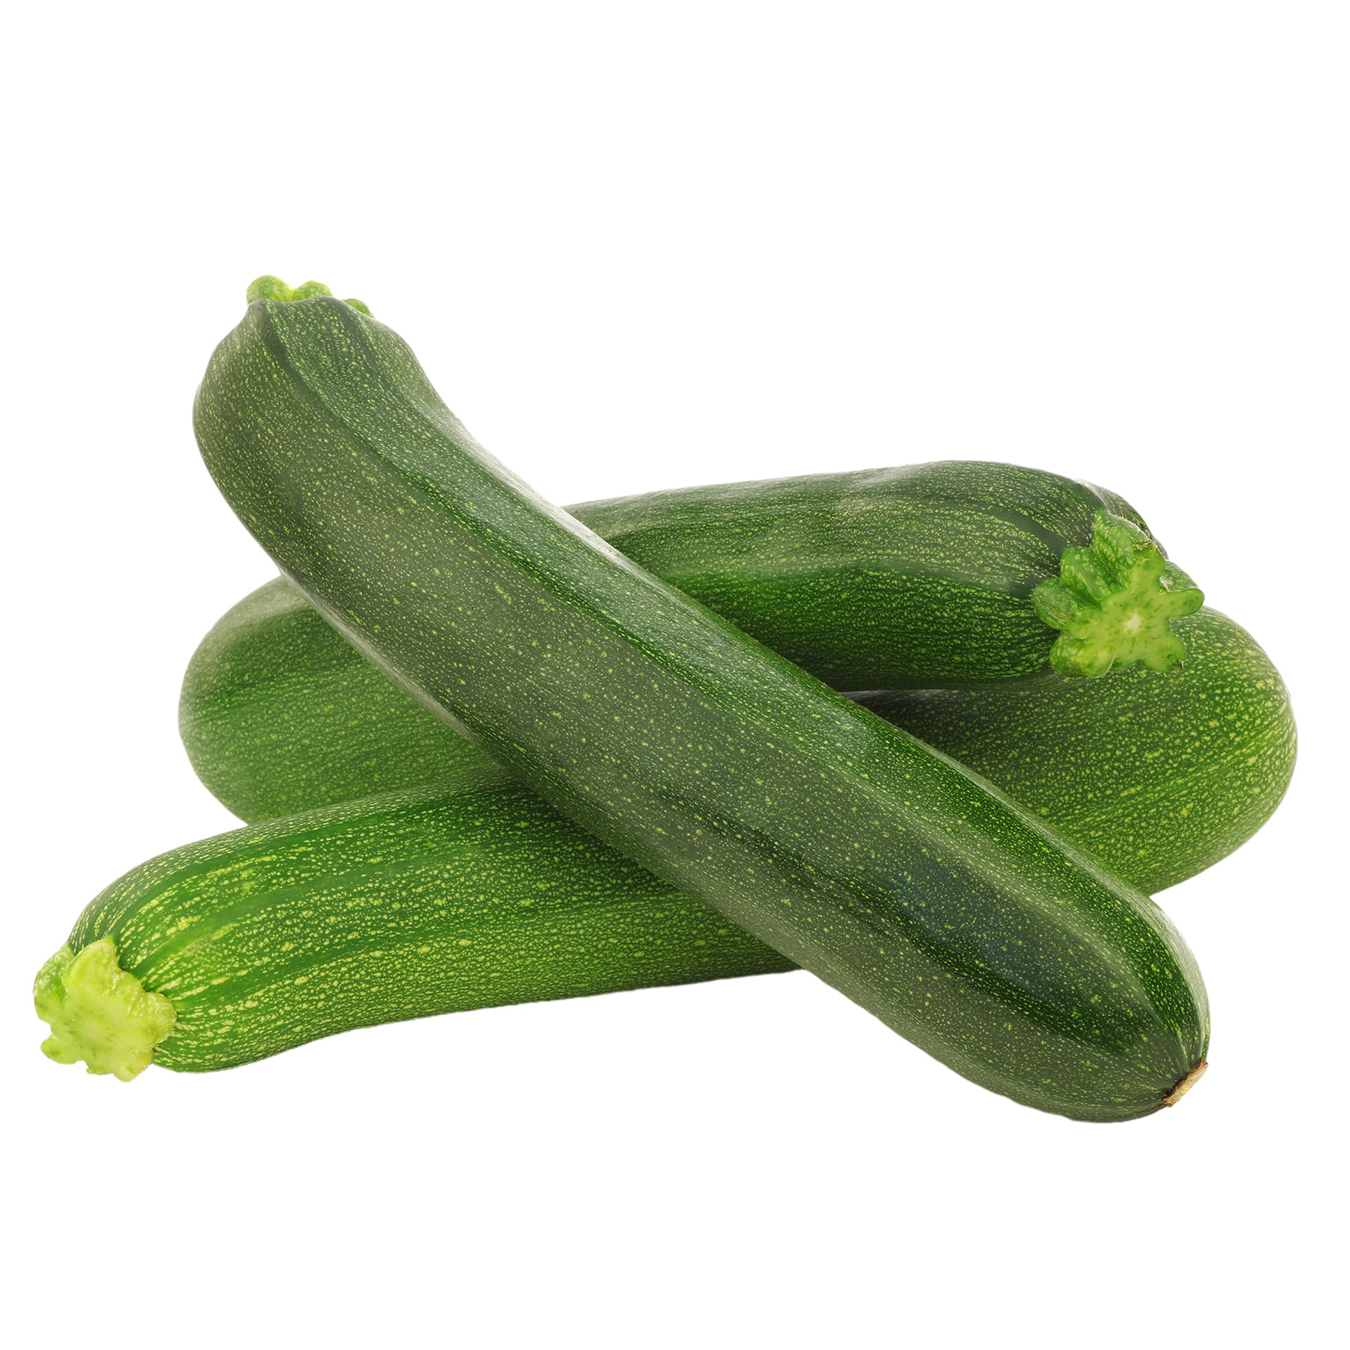 Green zucchini